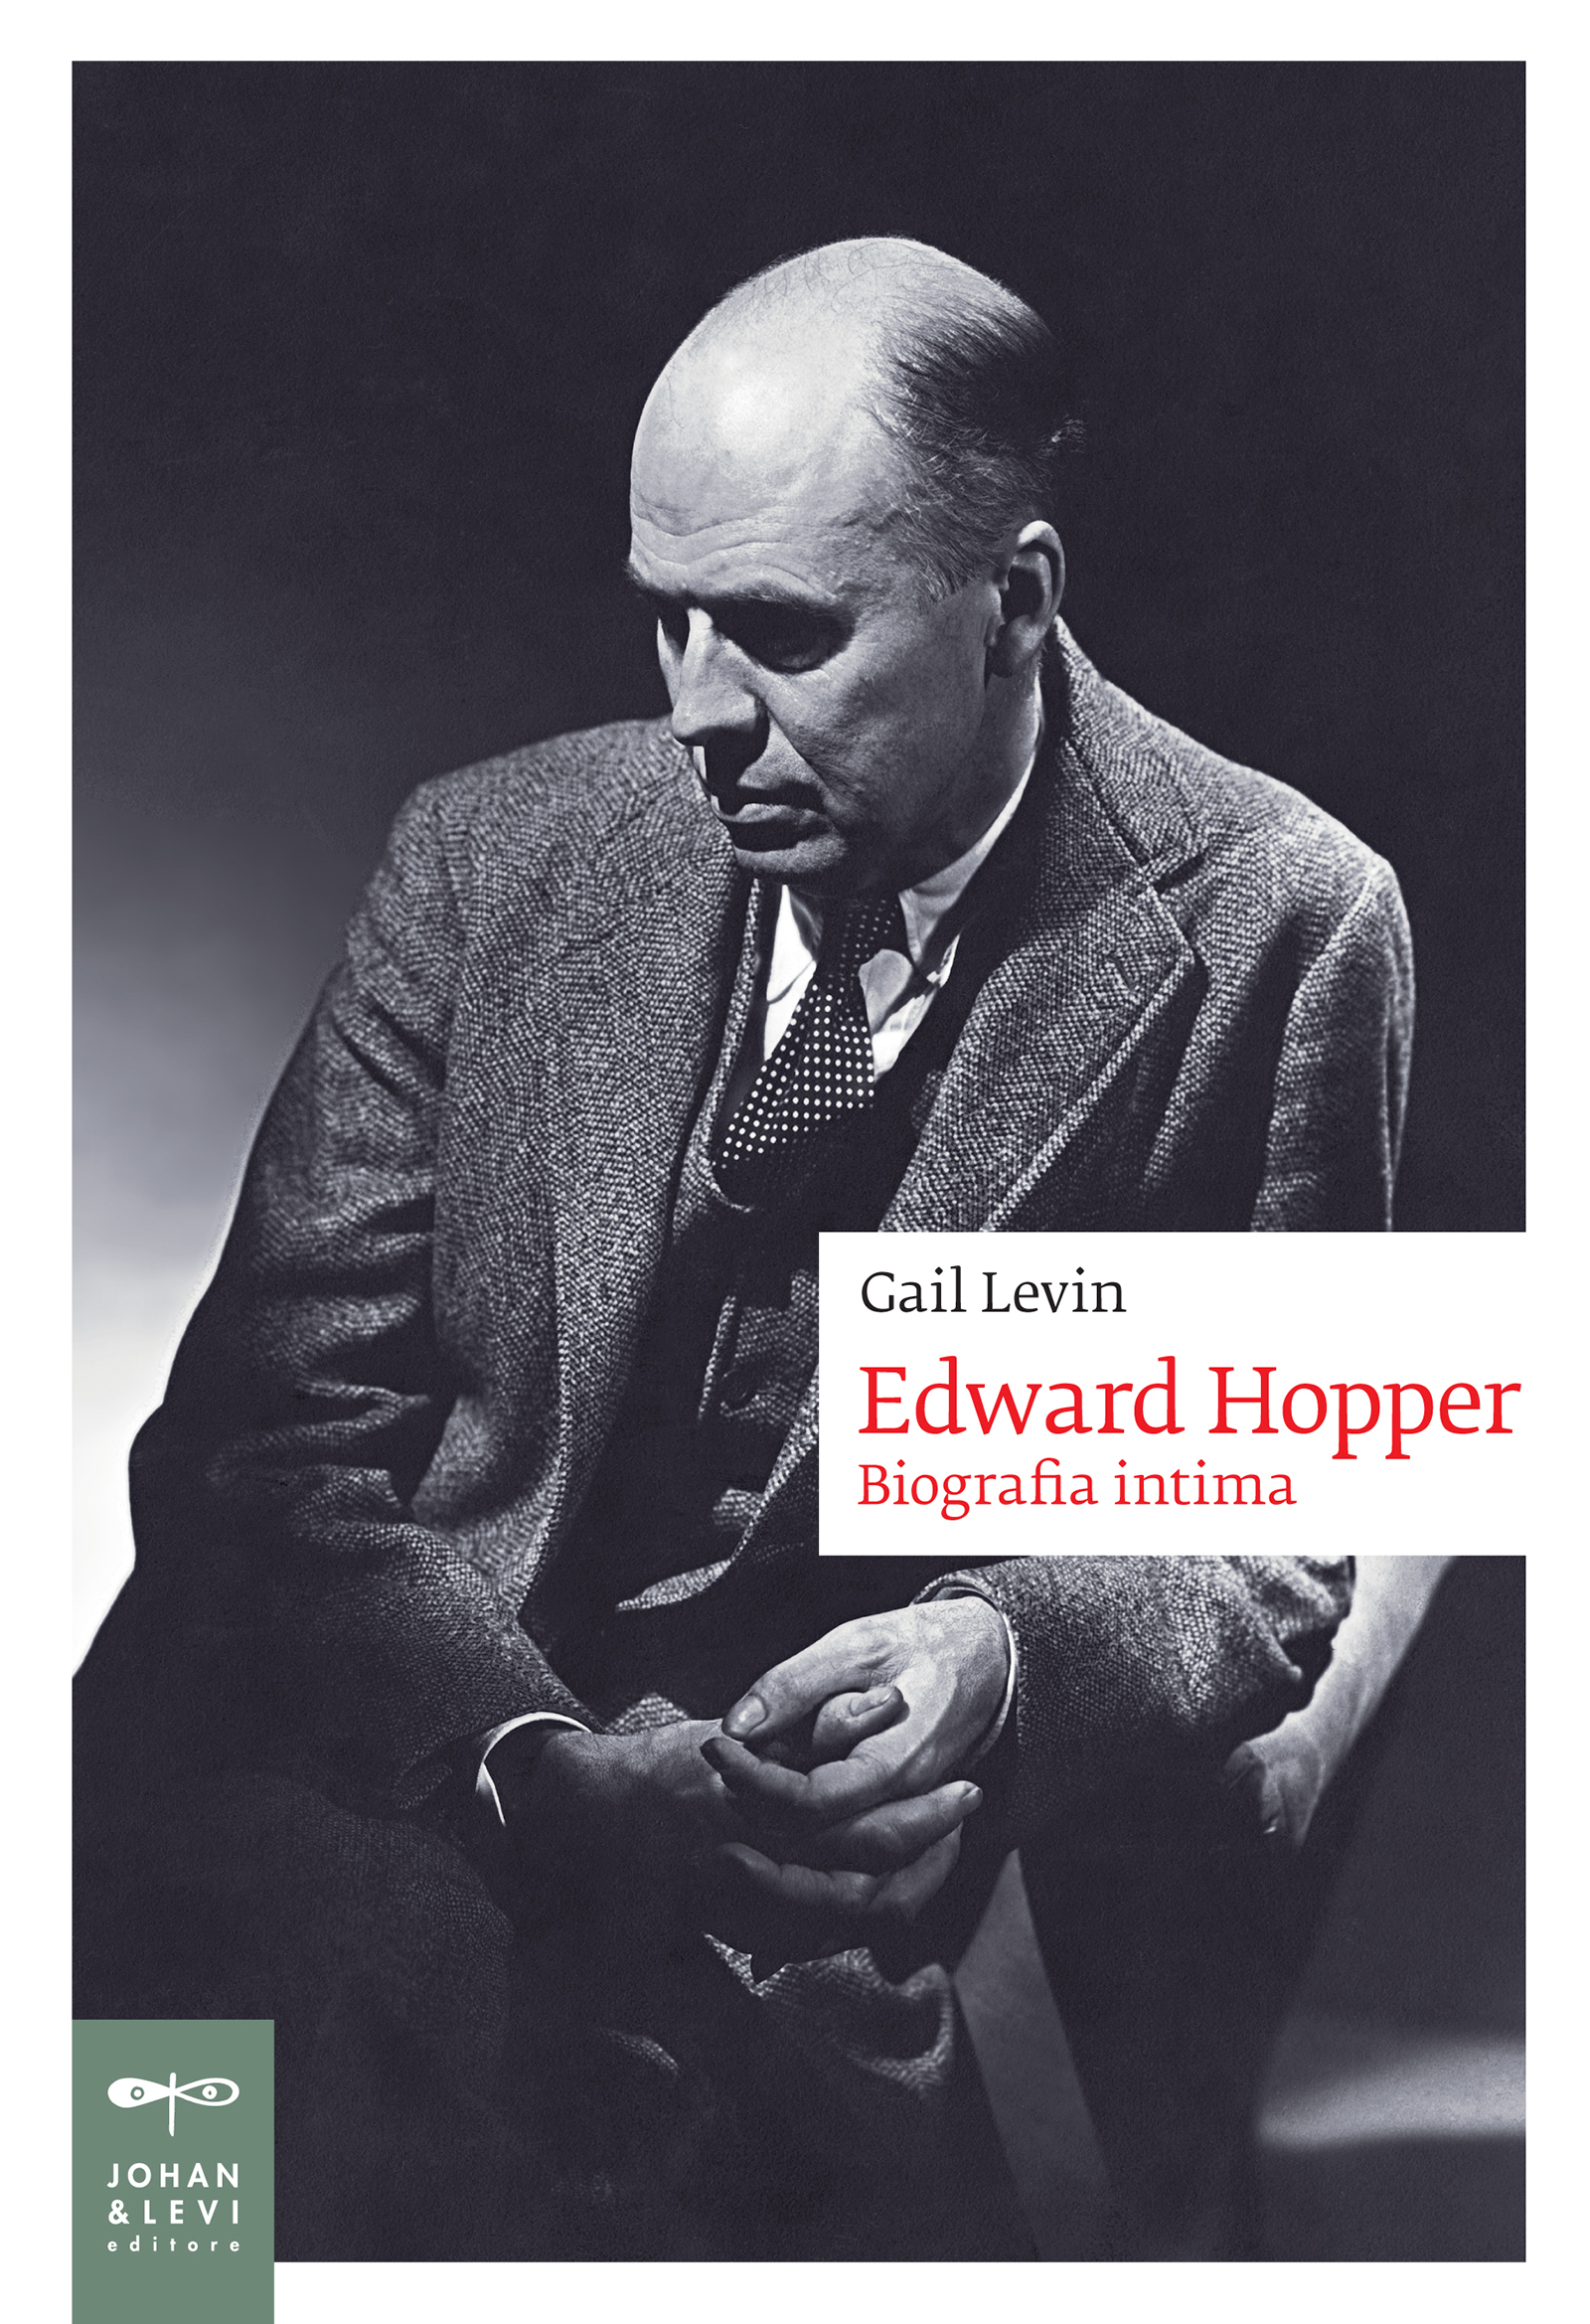 Edward Hopper - Gail Levin - Johan & Levi - Libro Johan & Levi Editore